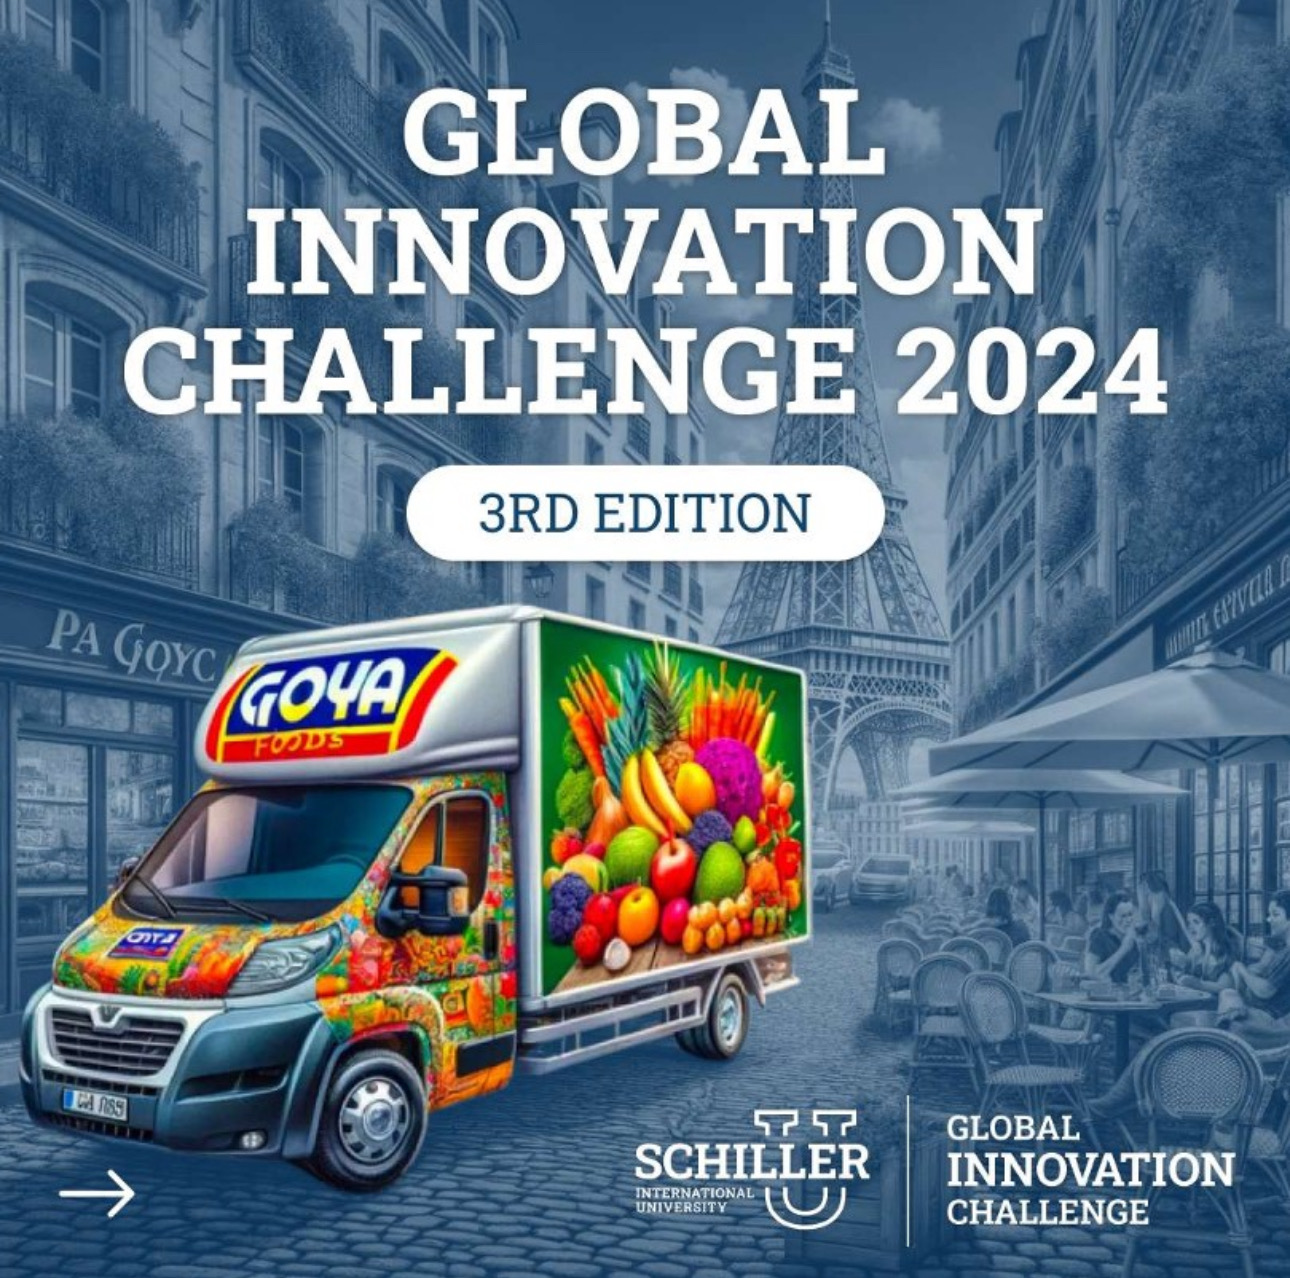 Global Innovation Challenge 2024 poster